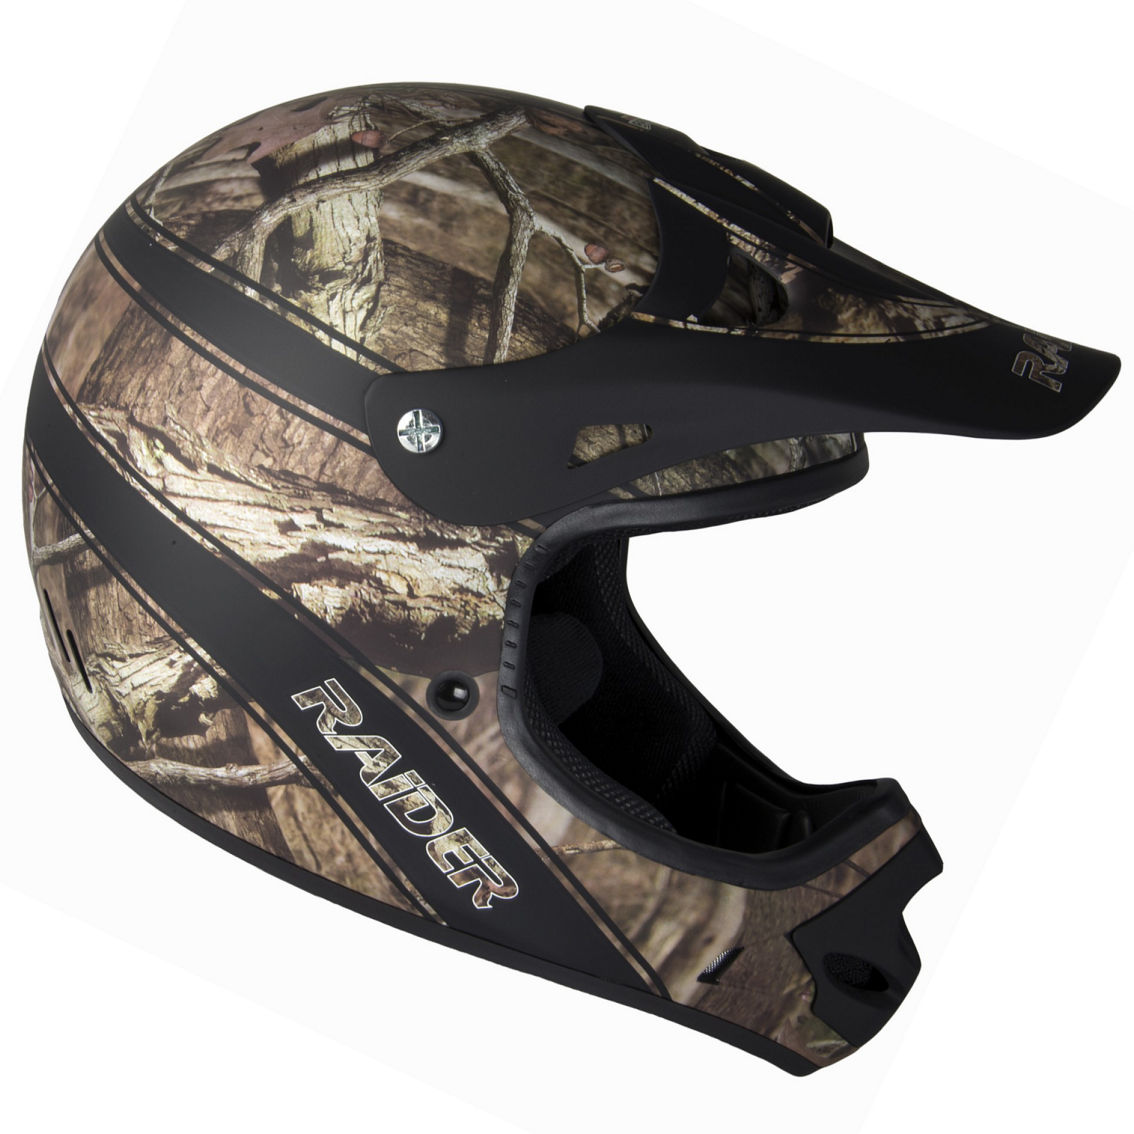 Raider Mossy Oak Camo MX Helmet - Image 2 of 6